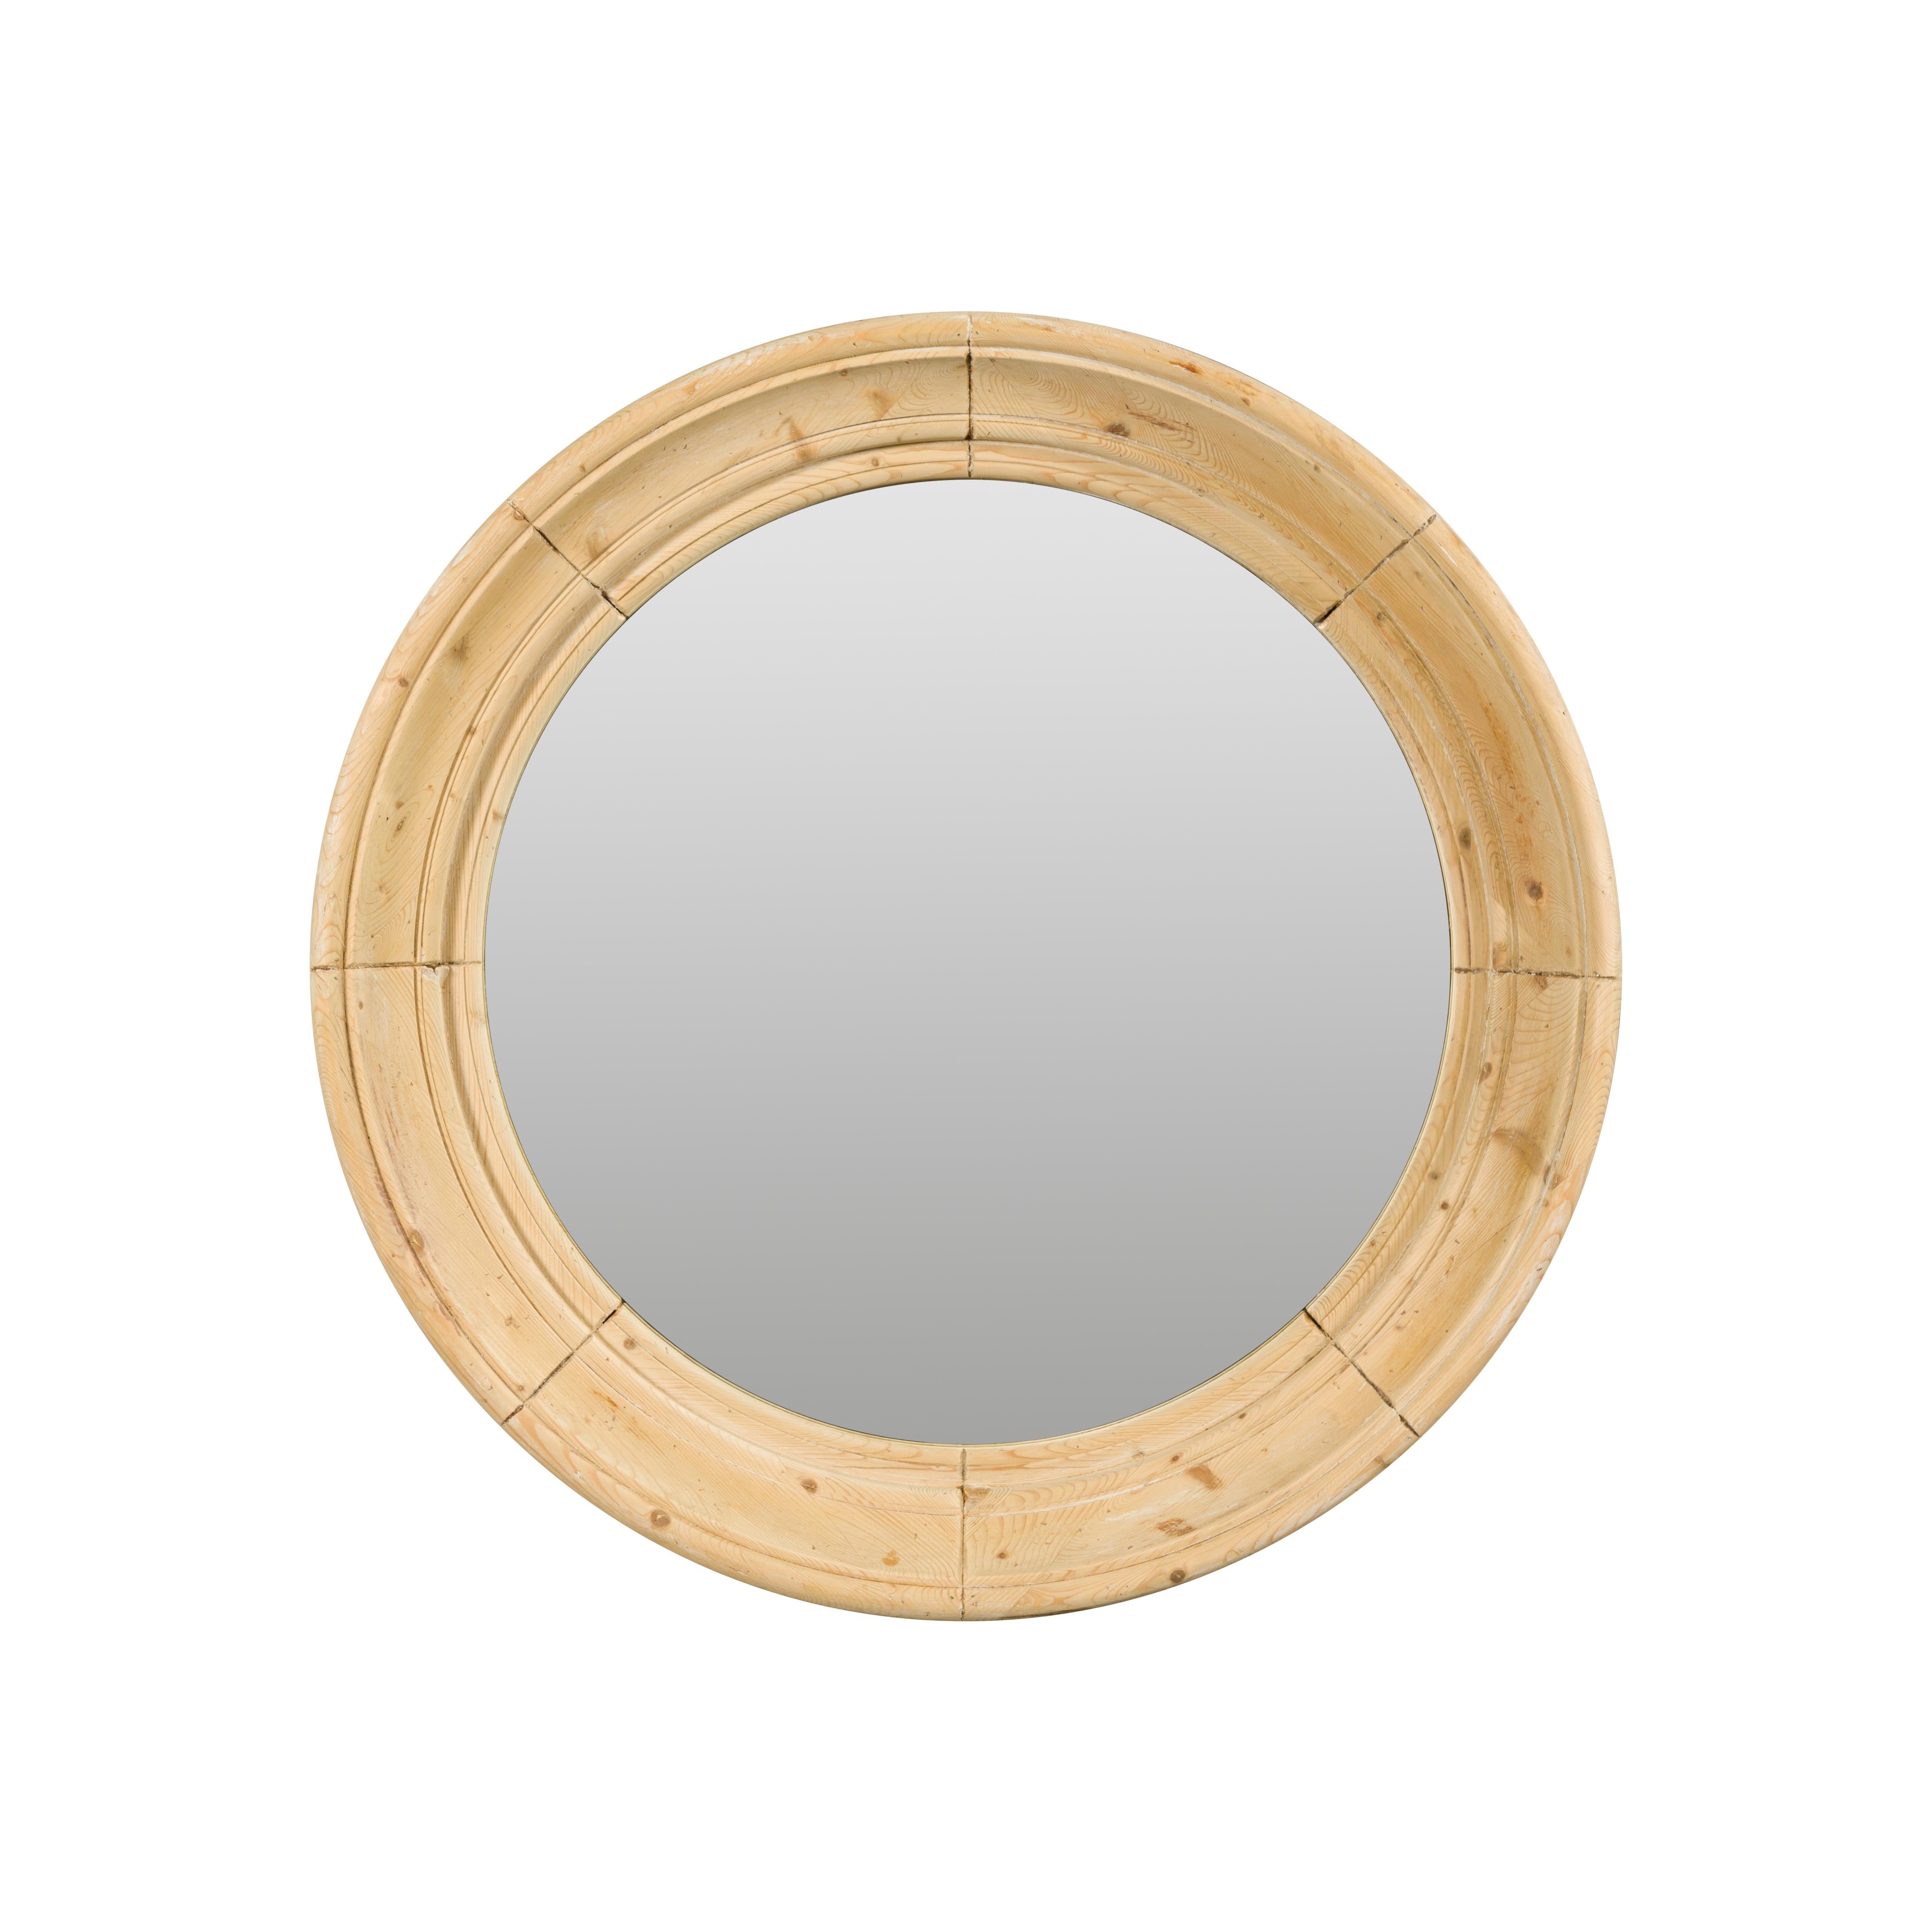 Rustic English Midcentury Pine Round Bullseye Mirror with Natural Finish 3